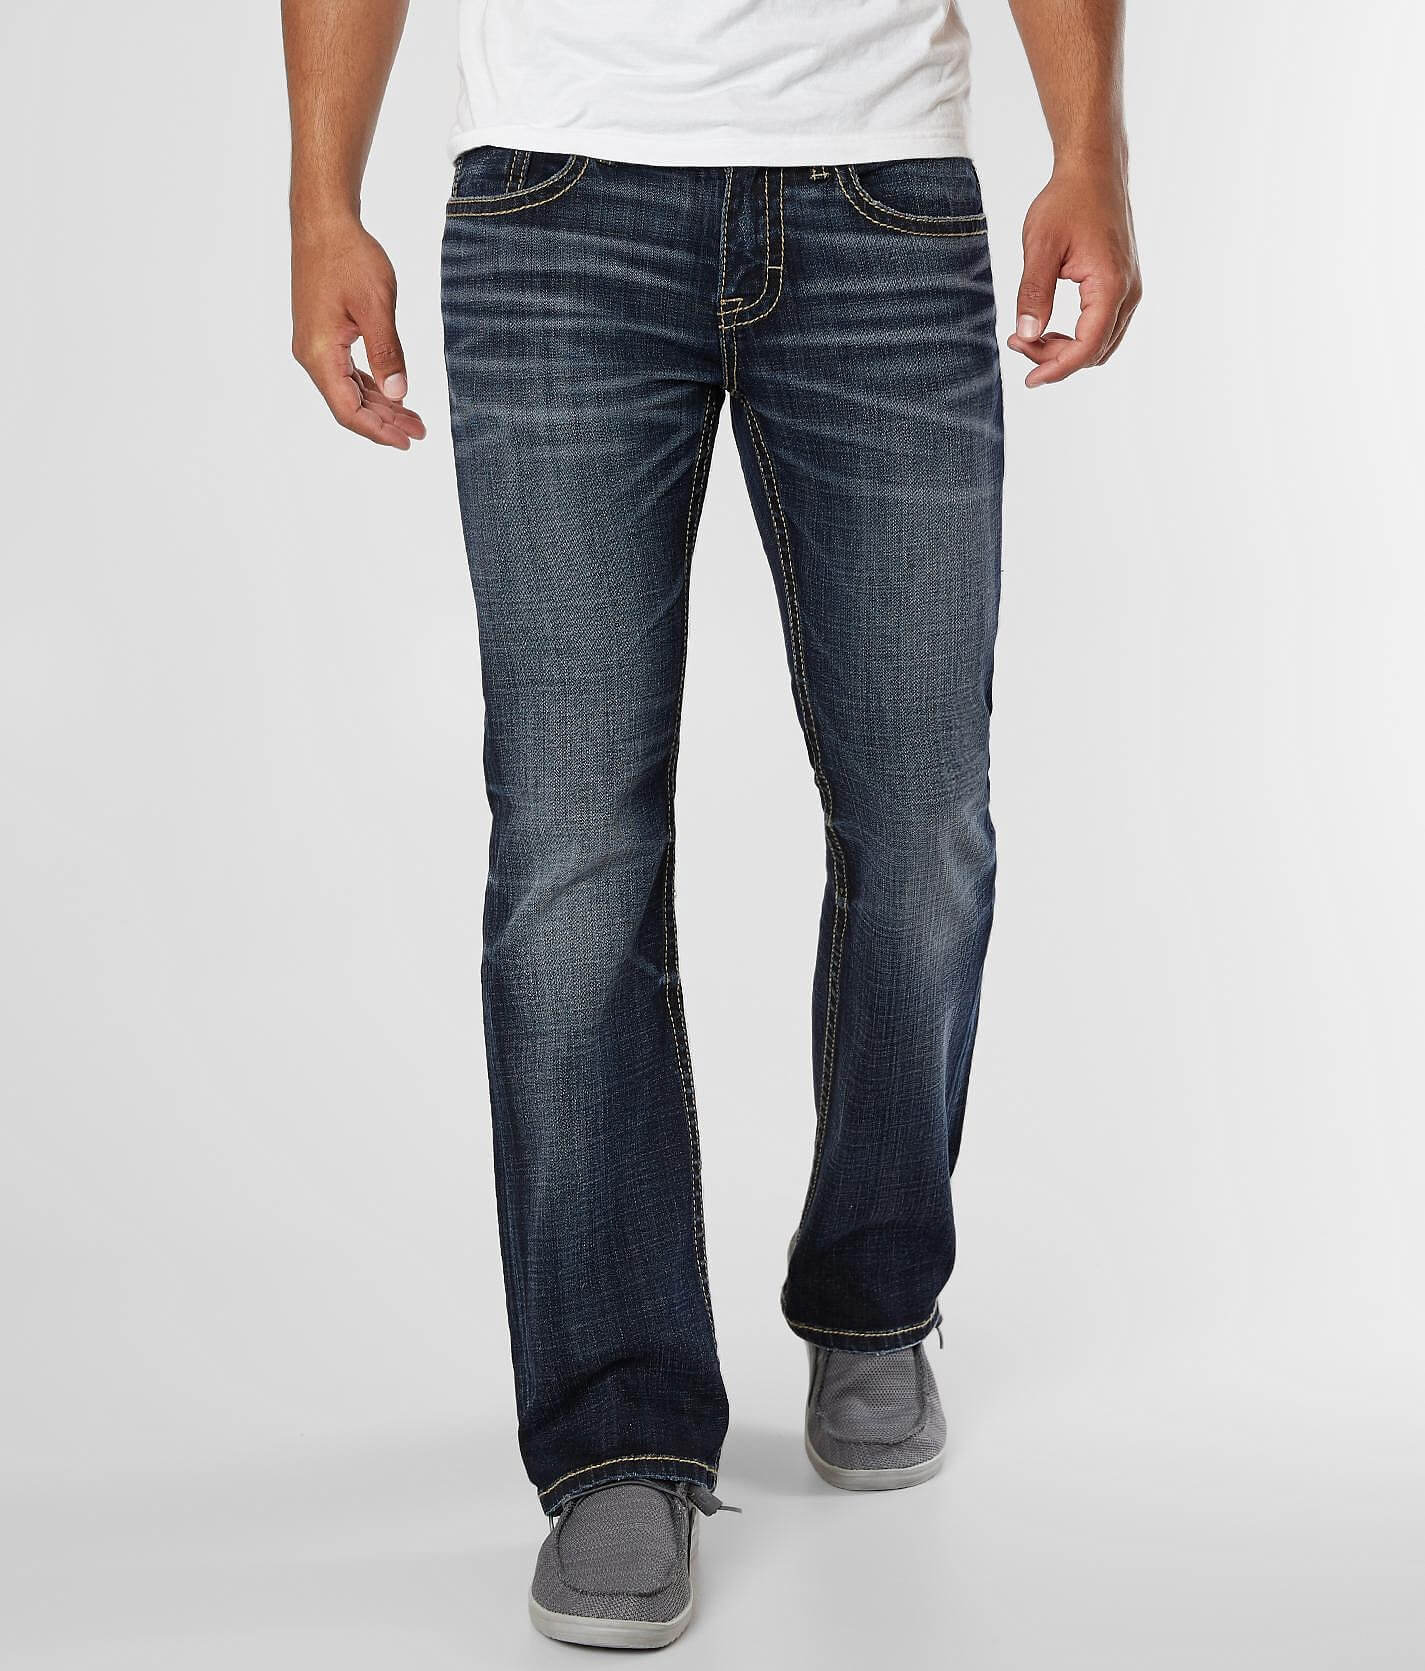 meyer jeans arizona